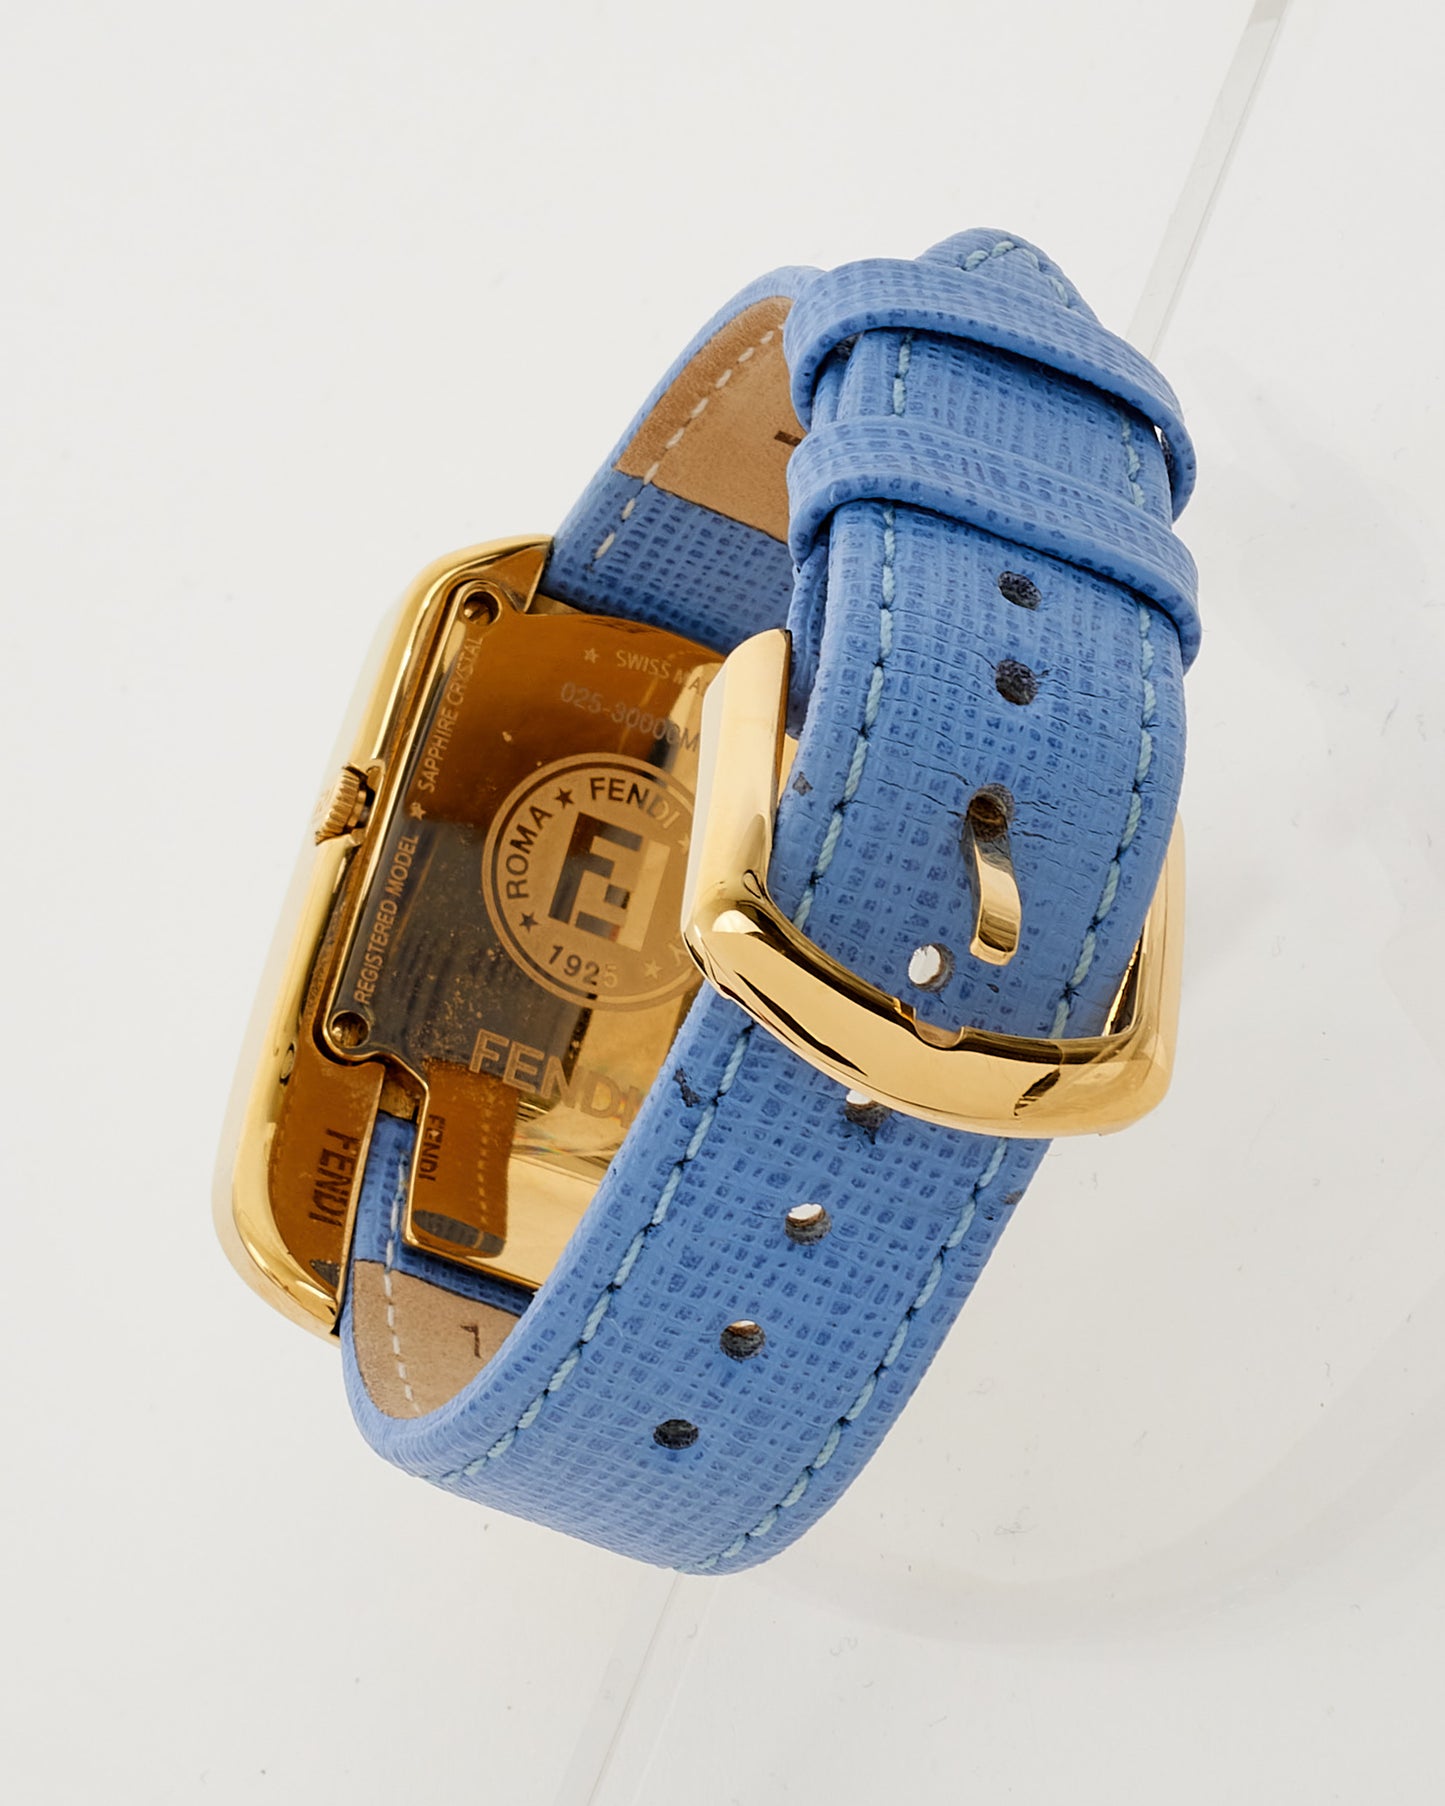 Fendi Gold/Blue Leather Chameleon Gold-Tone Quartz Watch